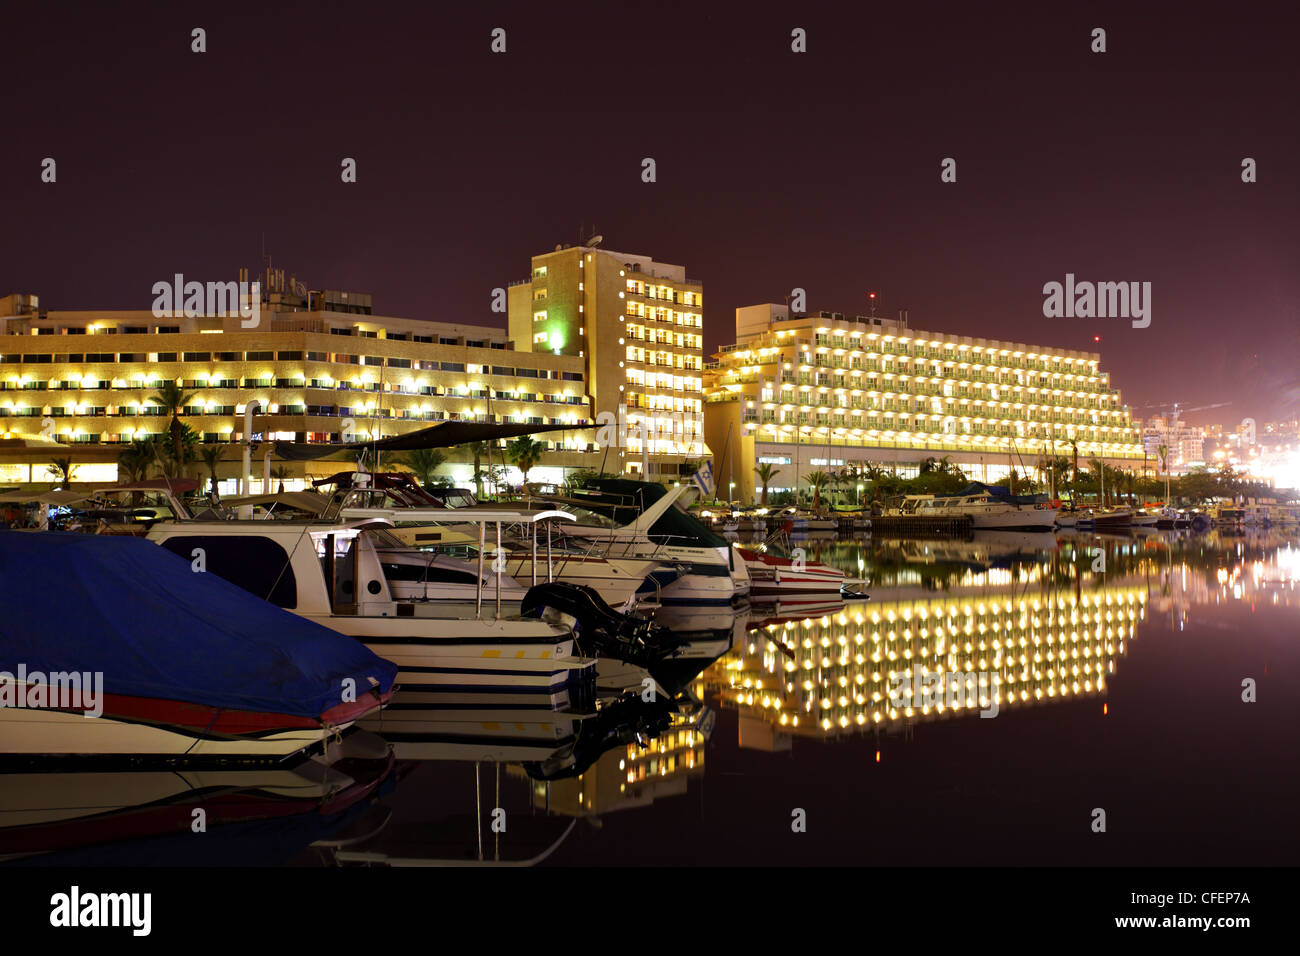 Hotels and yachts at night. Eilat. Israel. Stock Photo